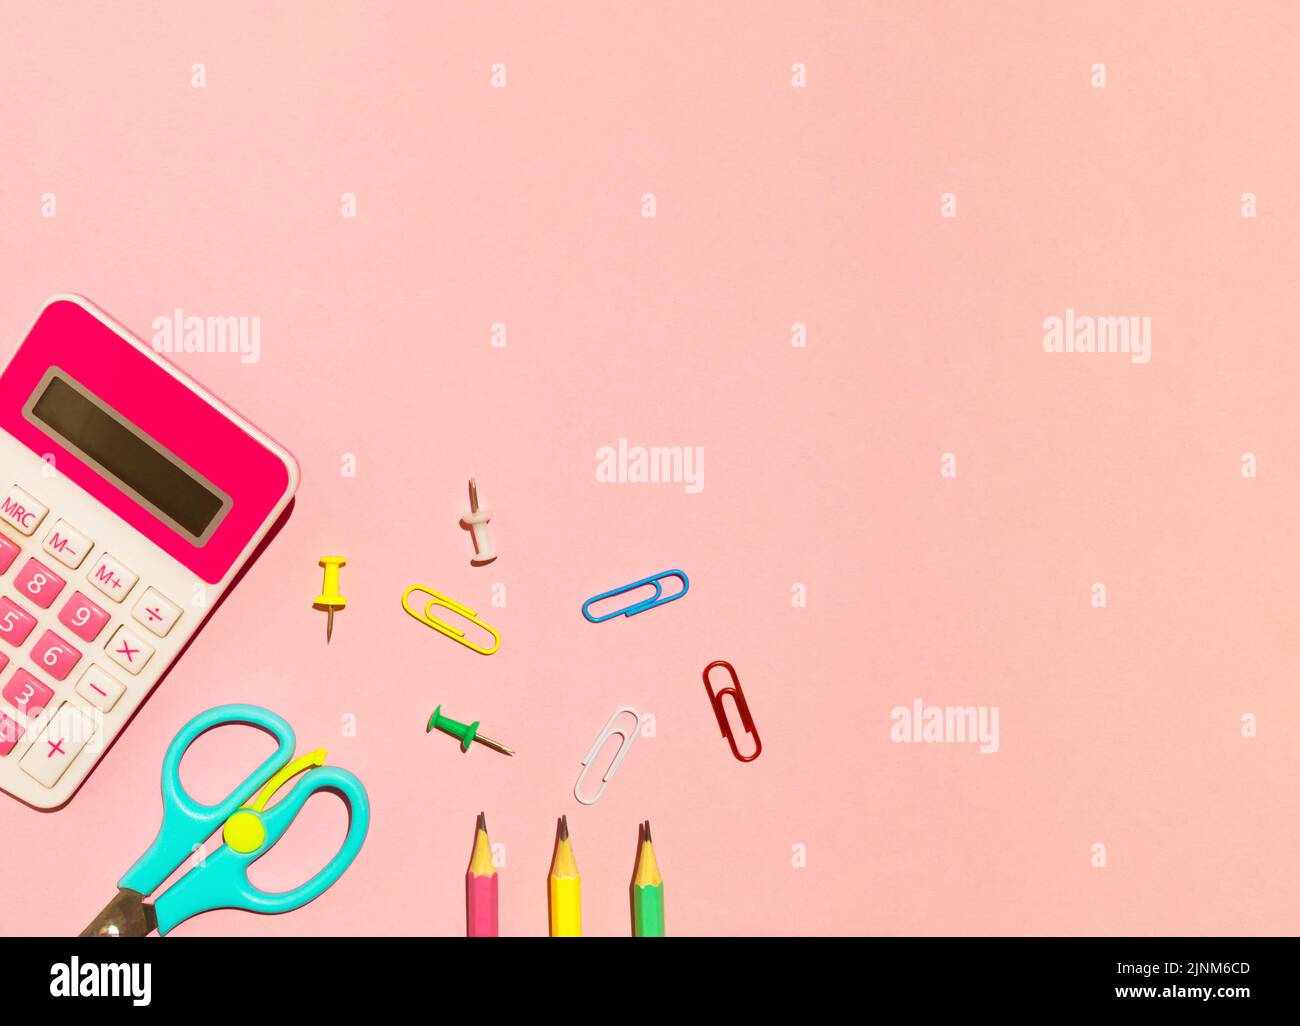 Pink Bling Tape Dispenser And Calculator Stock Photo - Download Image Now -  Bling Bling, Calculator, Change Dispenser - iStock